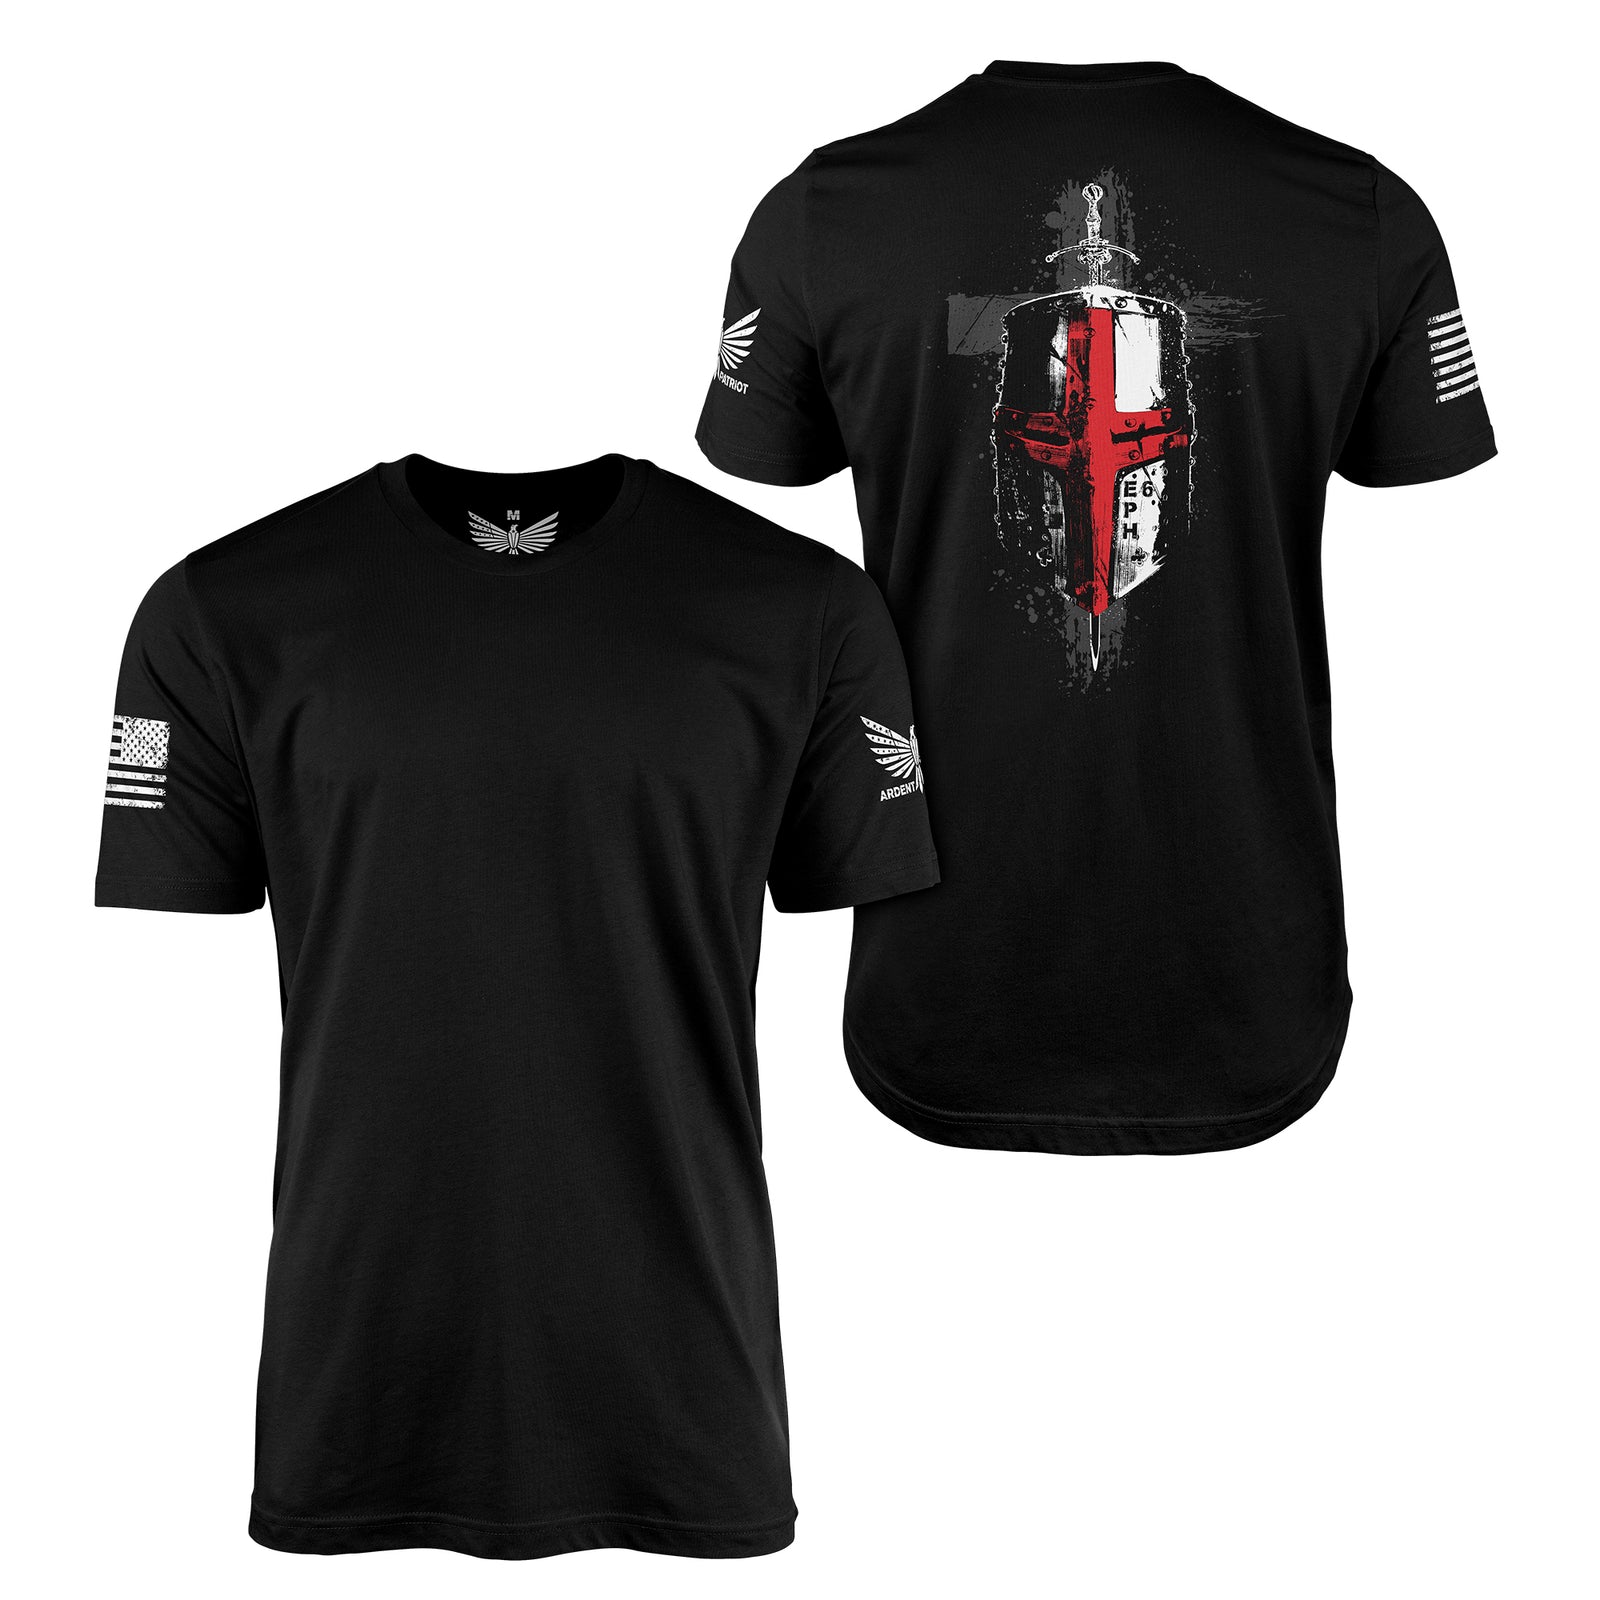 Crusader-Men's Shirt-S-Ardent Patriot Apparel Co.